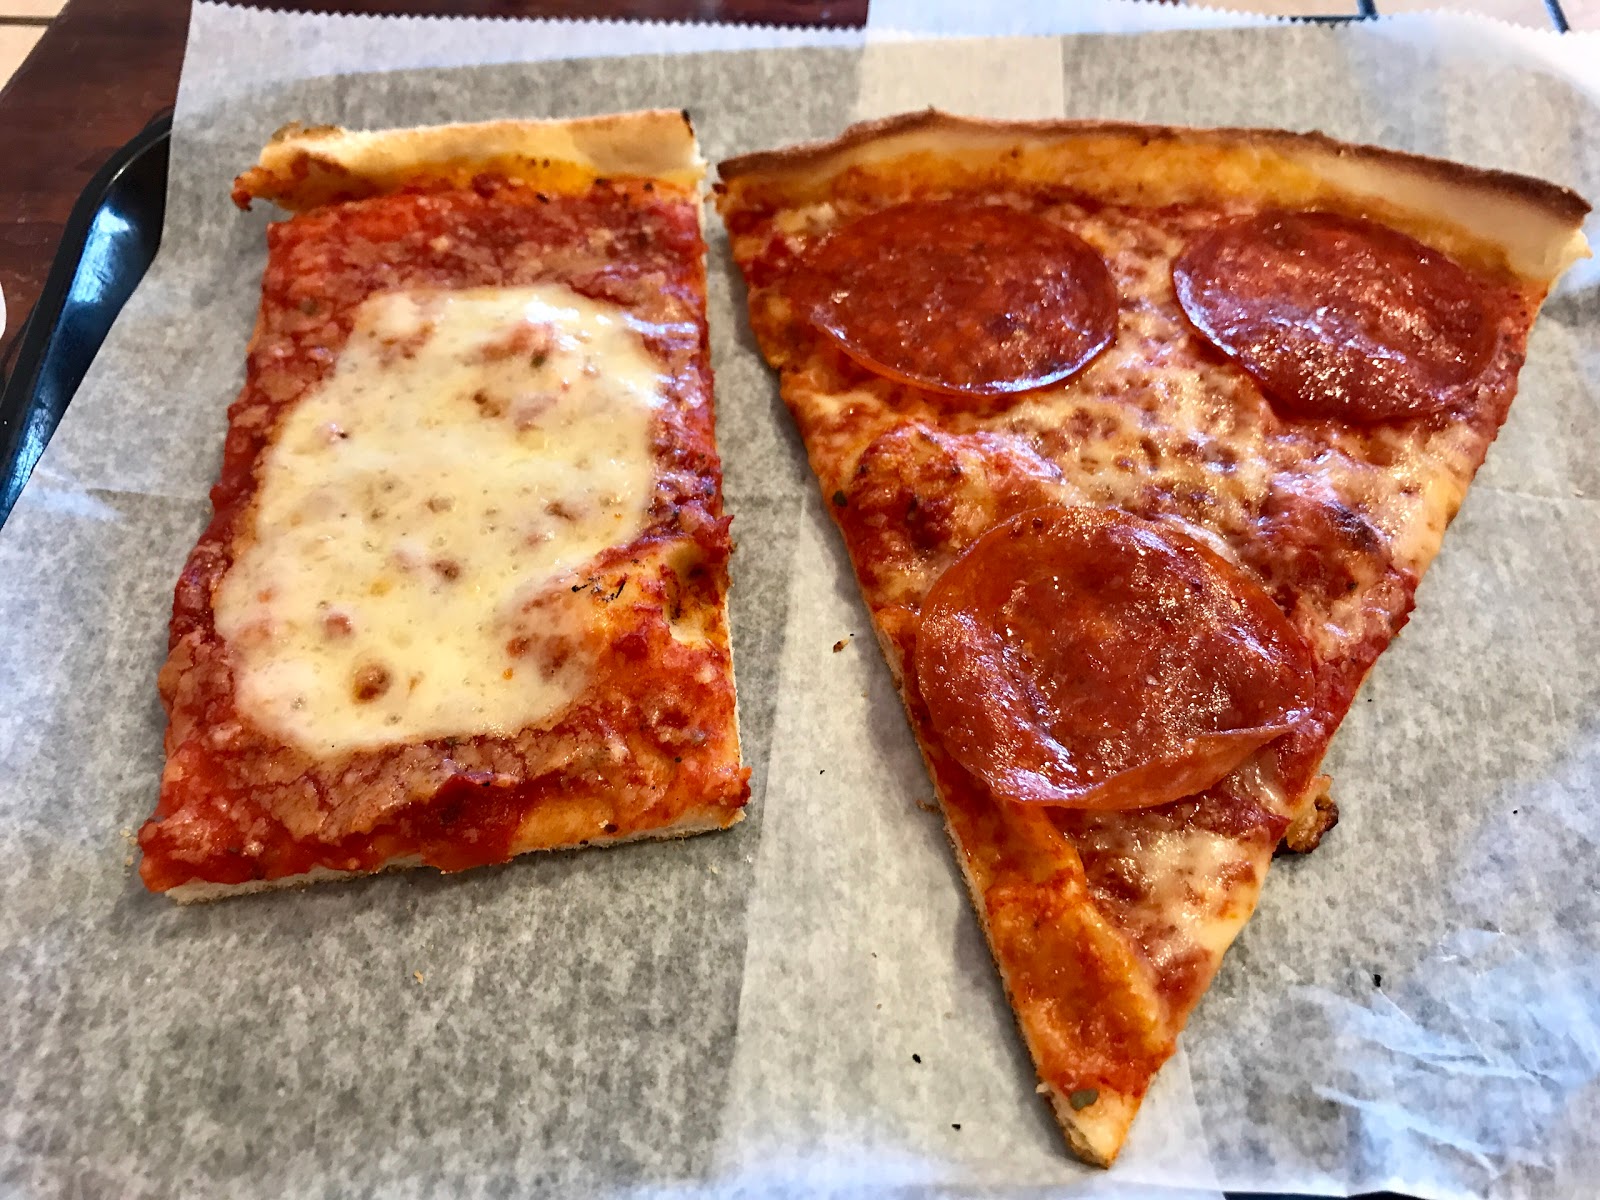 rizzo pizza jersey city